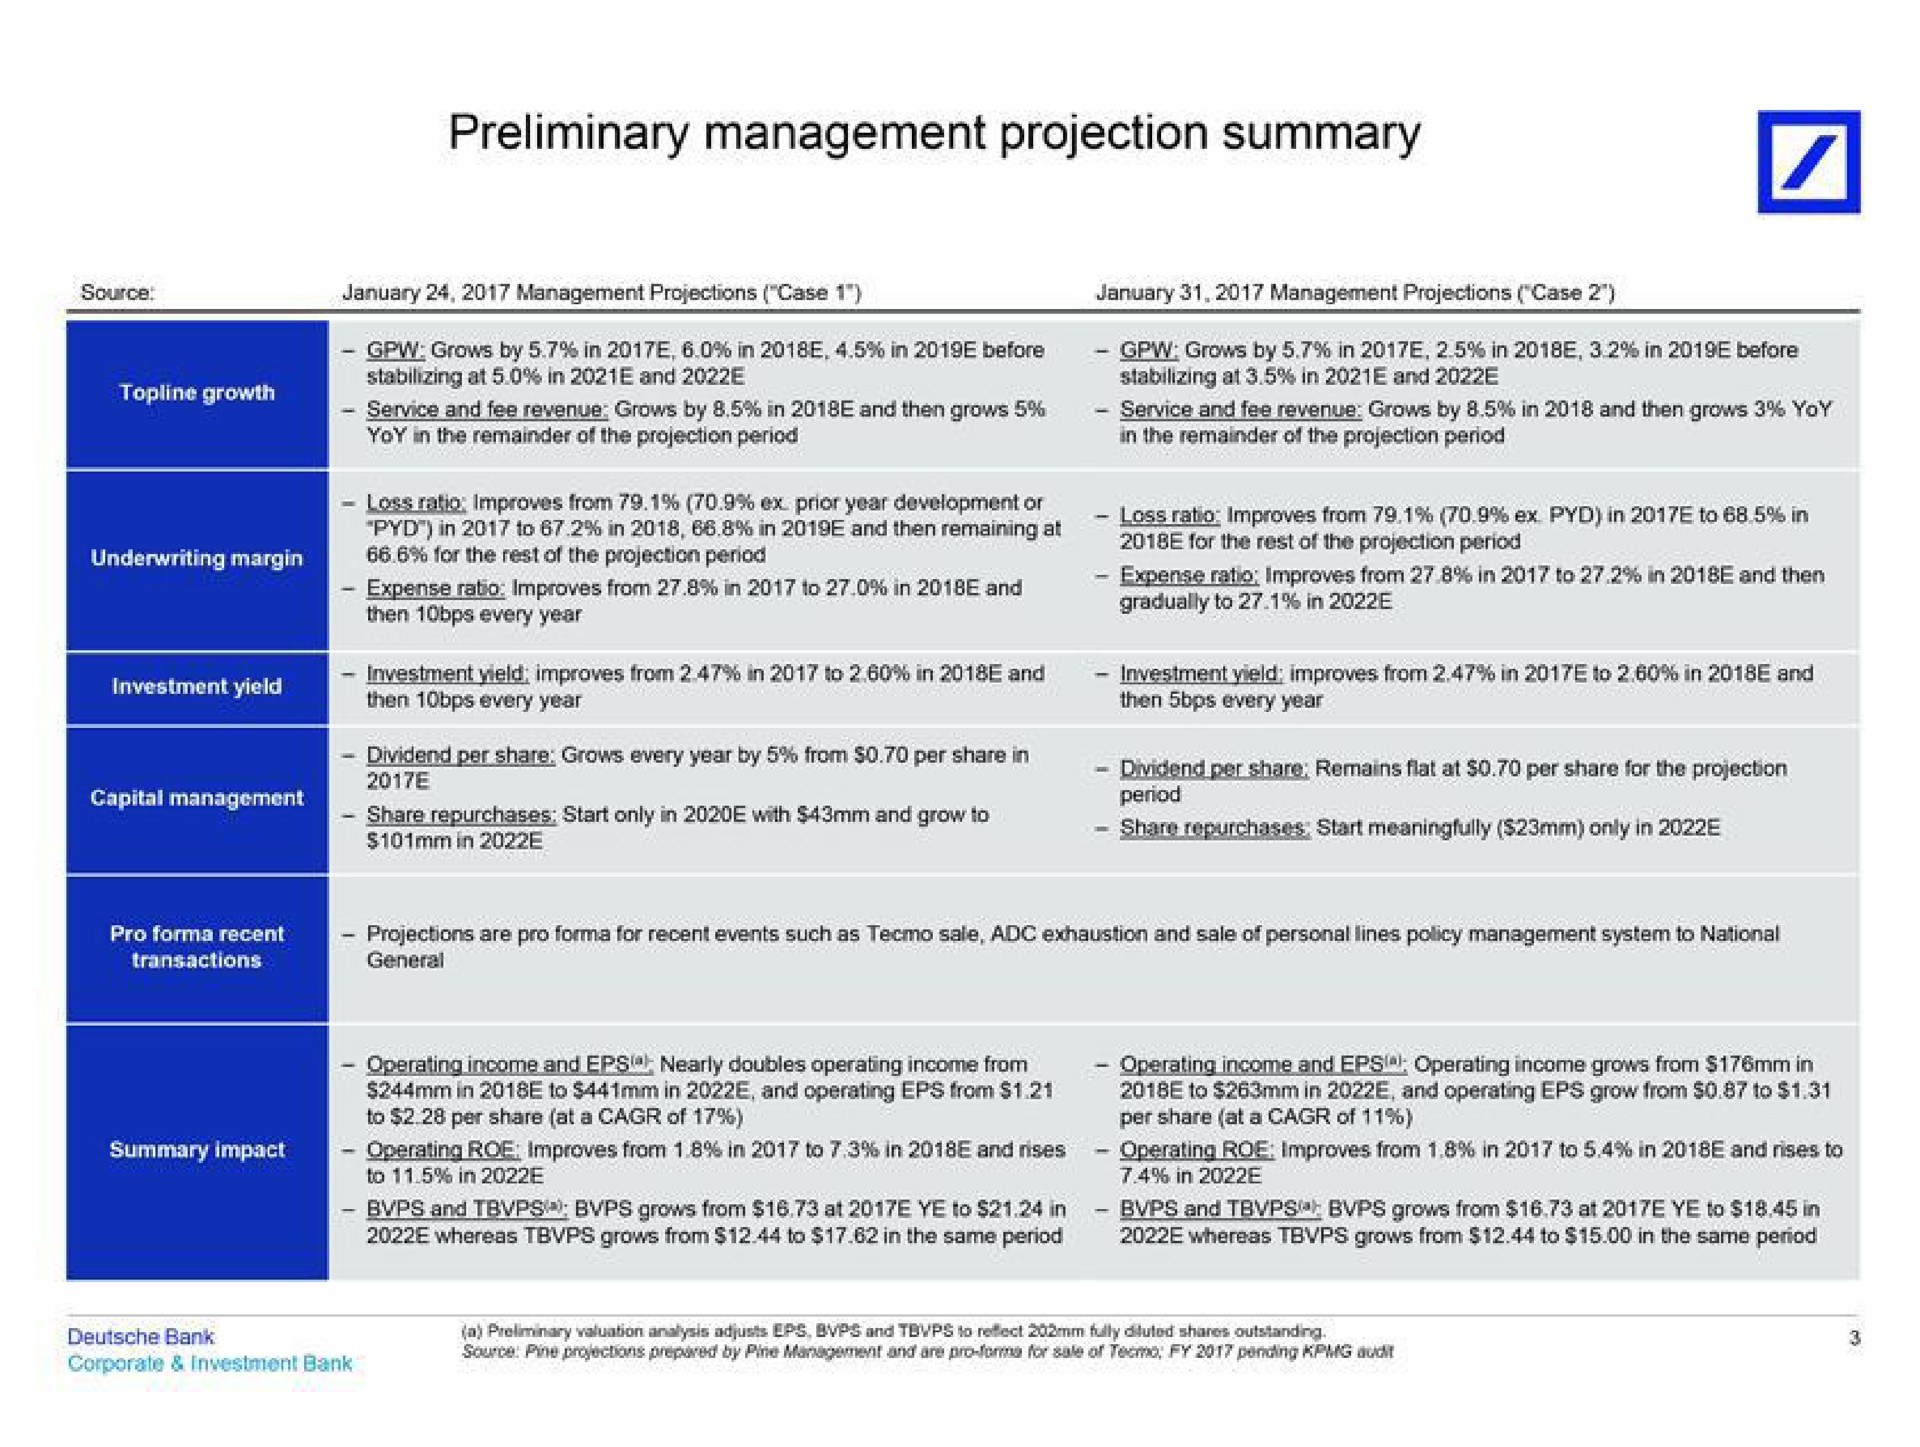 preliminary management projection summary | Deutsche Bank